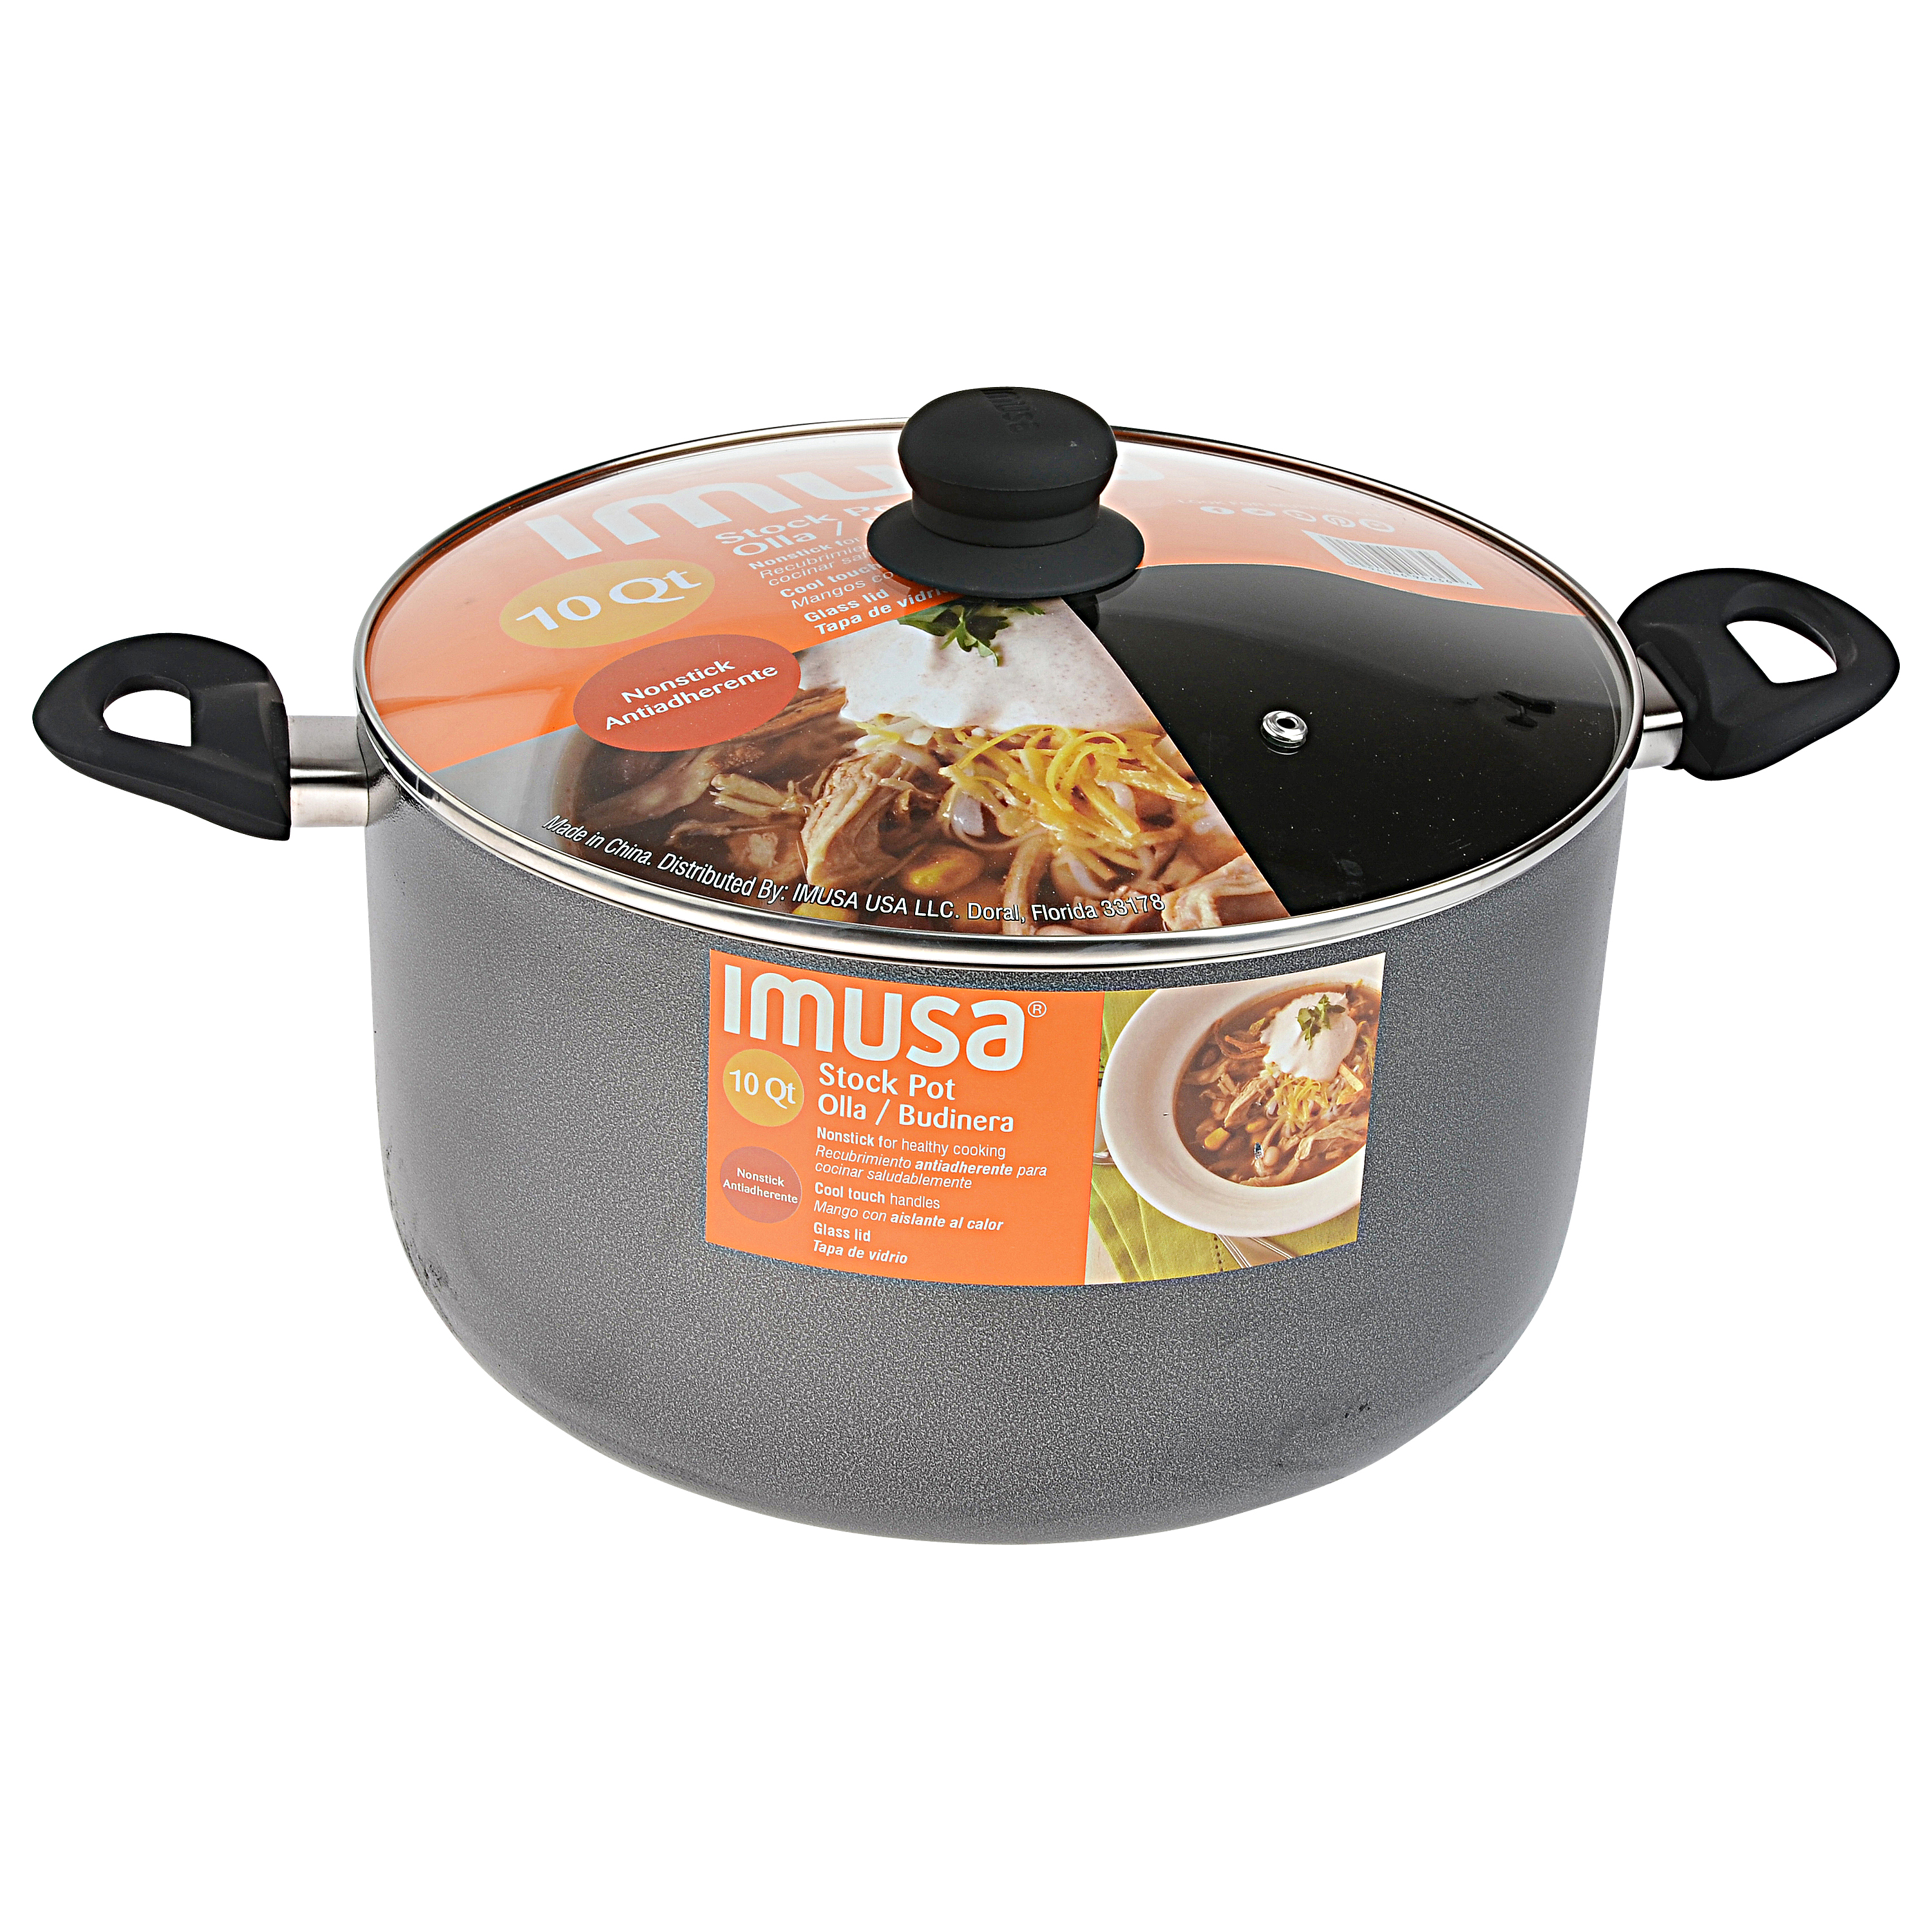 Imusa Sauce Pot, Aluminum, 8 Quart, Bakeware & Cookware